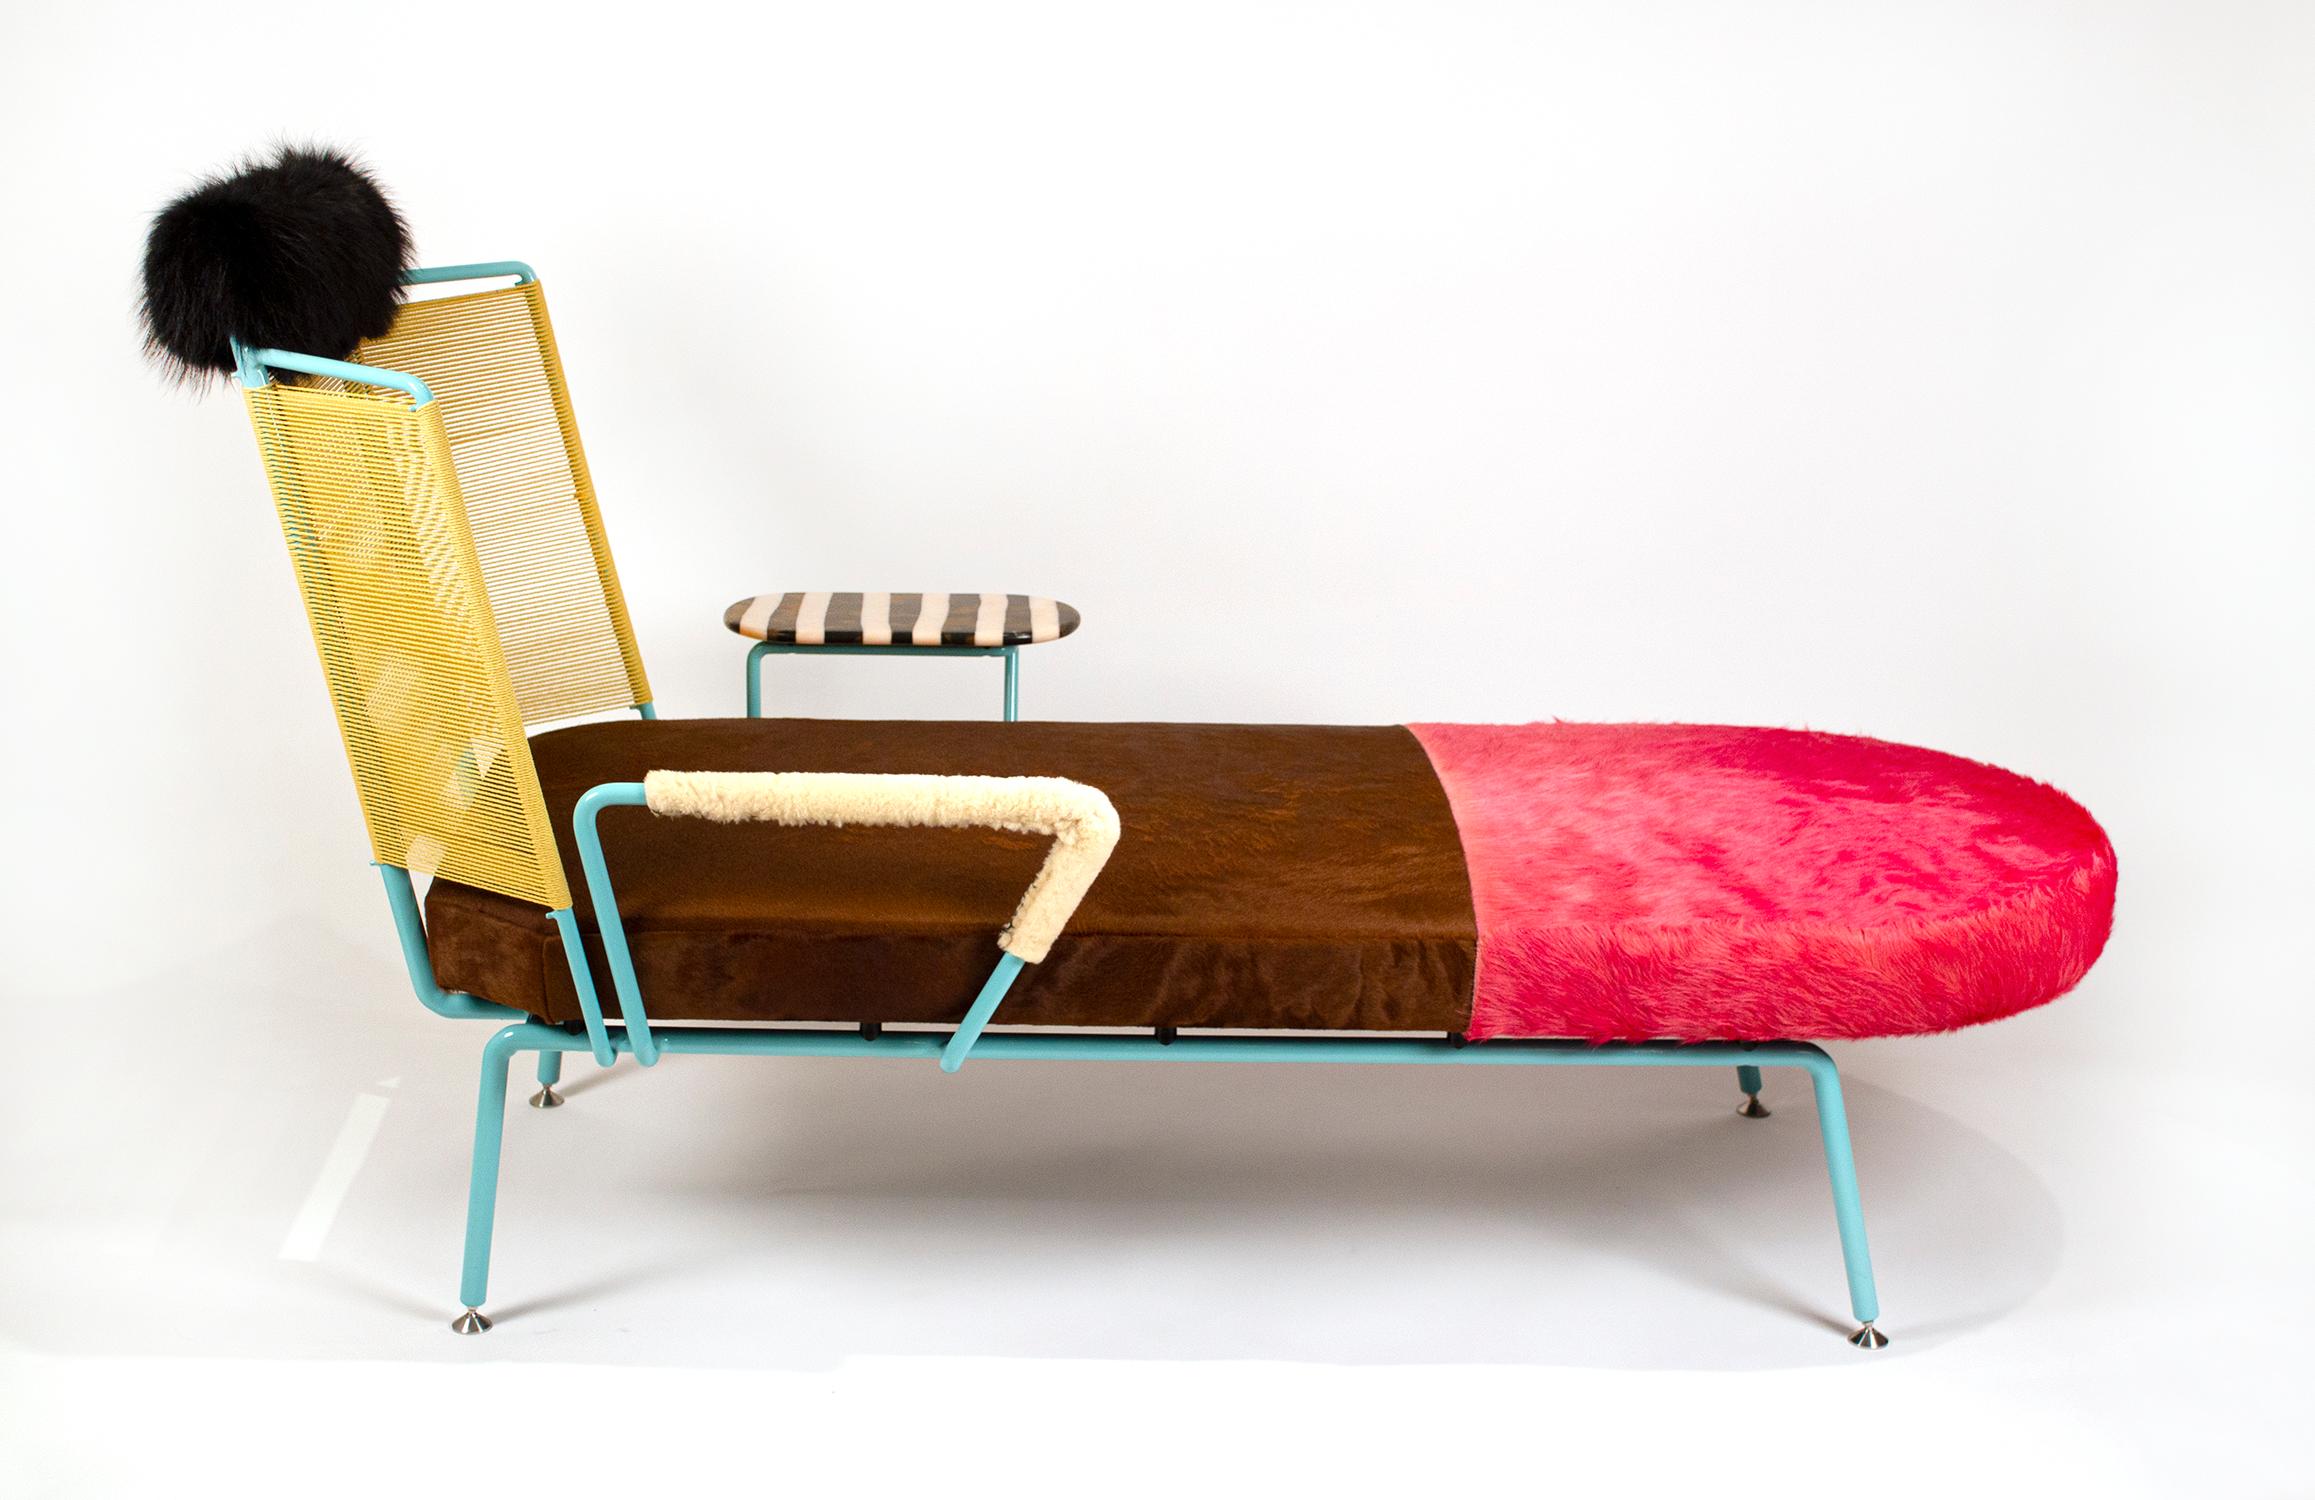 Chaise lounge 'Custard Ma Ma' designed by London based artist Jonathan Trayte. Comprised of cowhide, sheepskin, raccoon fur, marble, powder coat steel and woven polyester cord.

Jonathan Trayte was born in 1980 in Huddersfield, UK. Jonathan Trayte